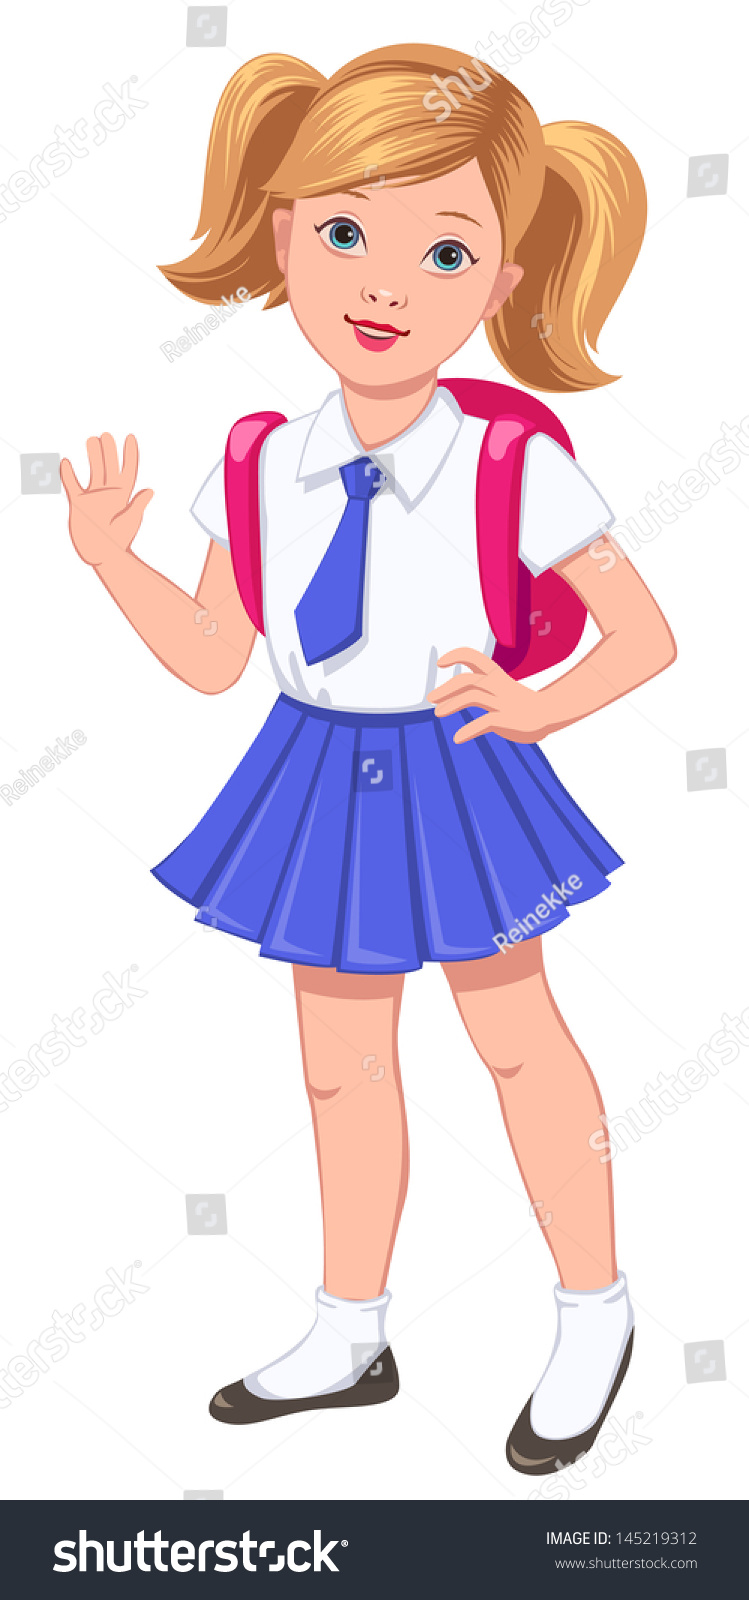 clipart girl in school uniform - photo #15